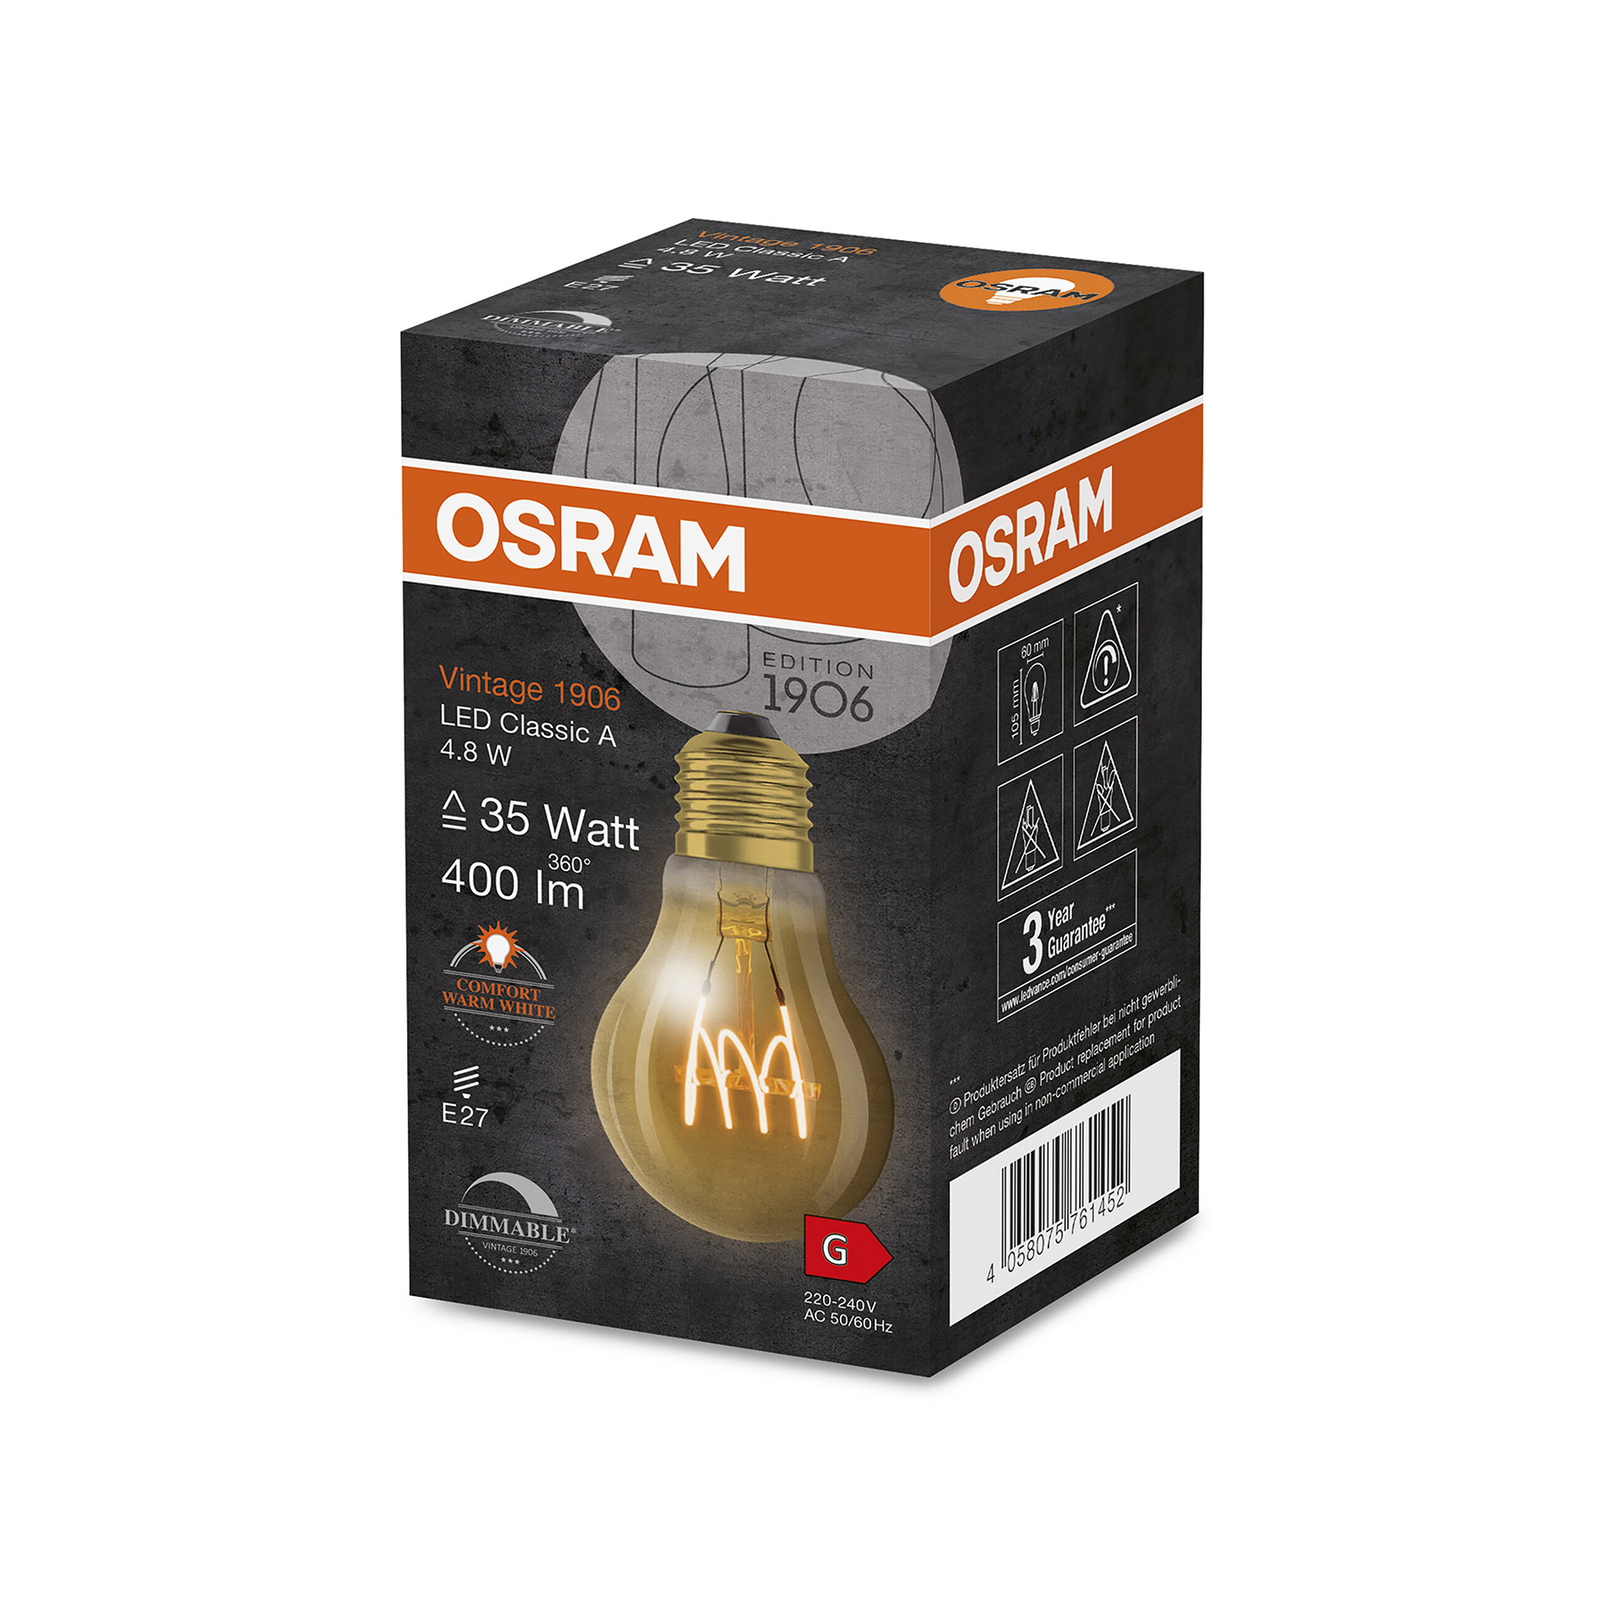 OSRAM Vintage 1906 Classic A LED E27 4,8W gold him